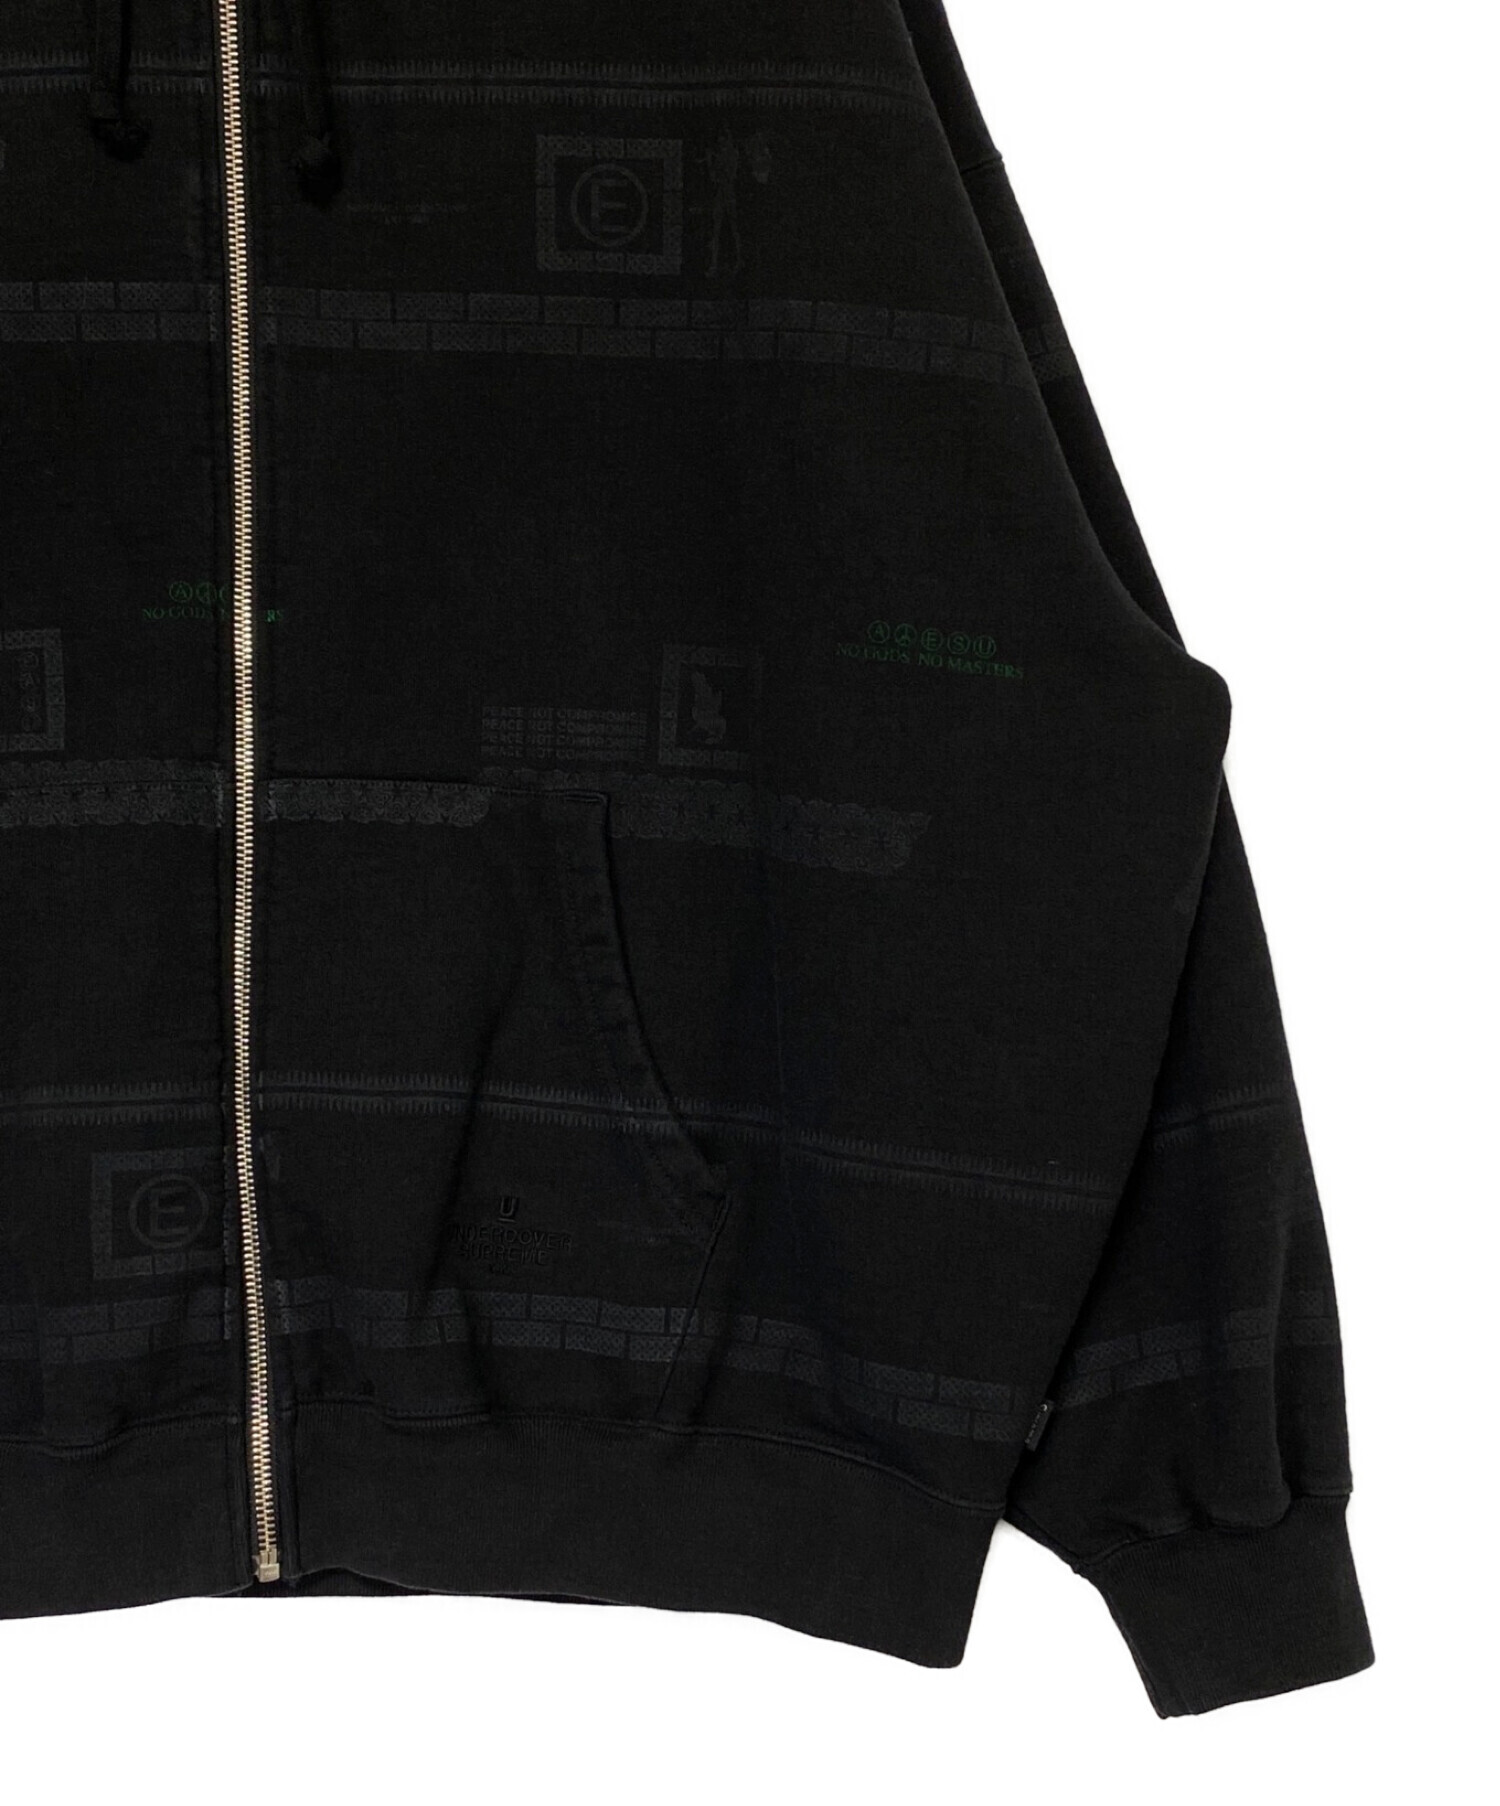 SUPREME (シュプリーム) UNDERCOVER (アンダーカバー) Zip Up Hooded Sweatshirt ブラック サイズ:L